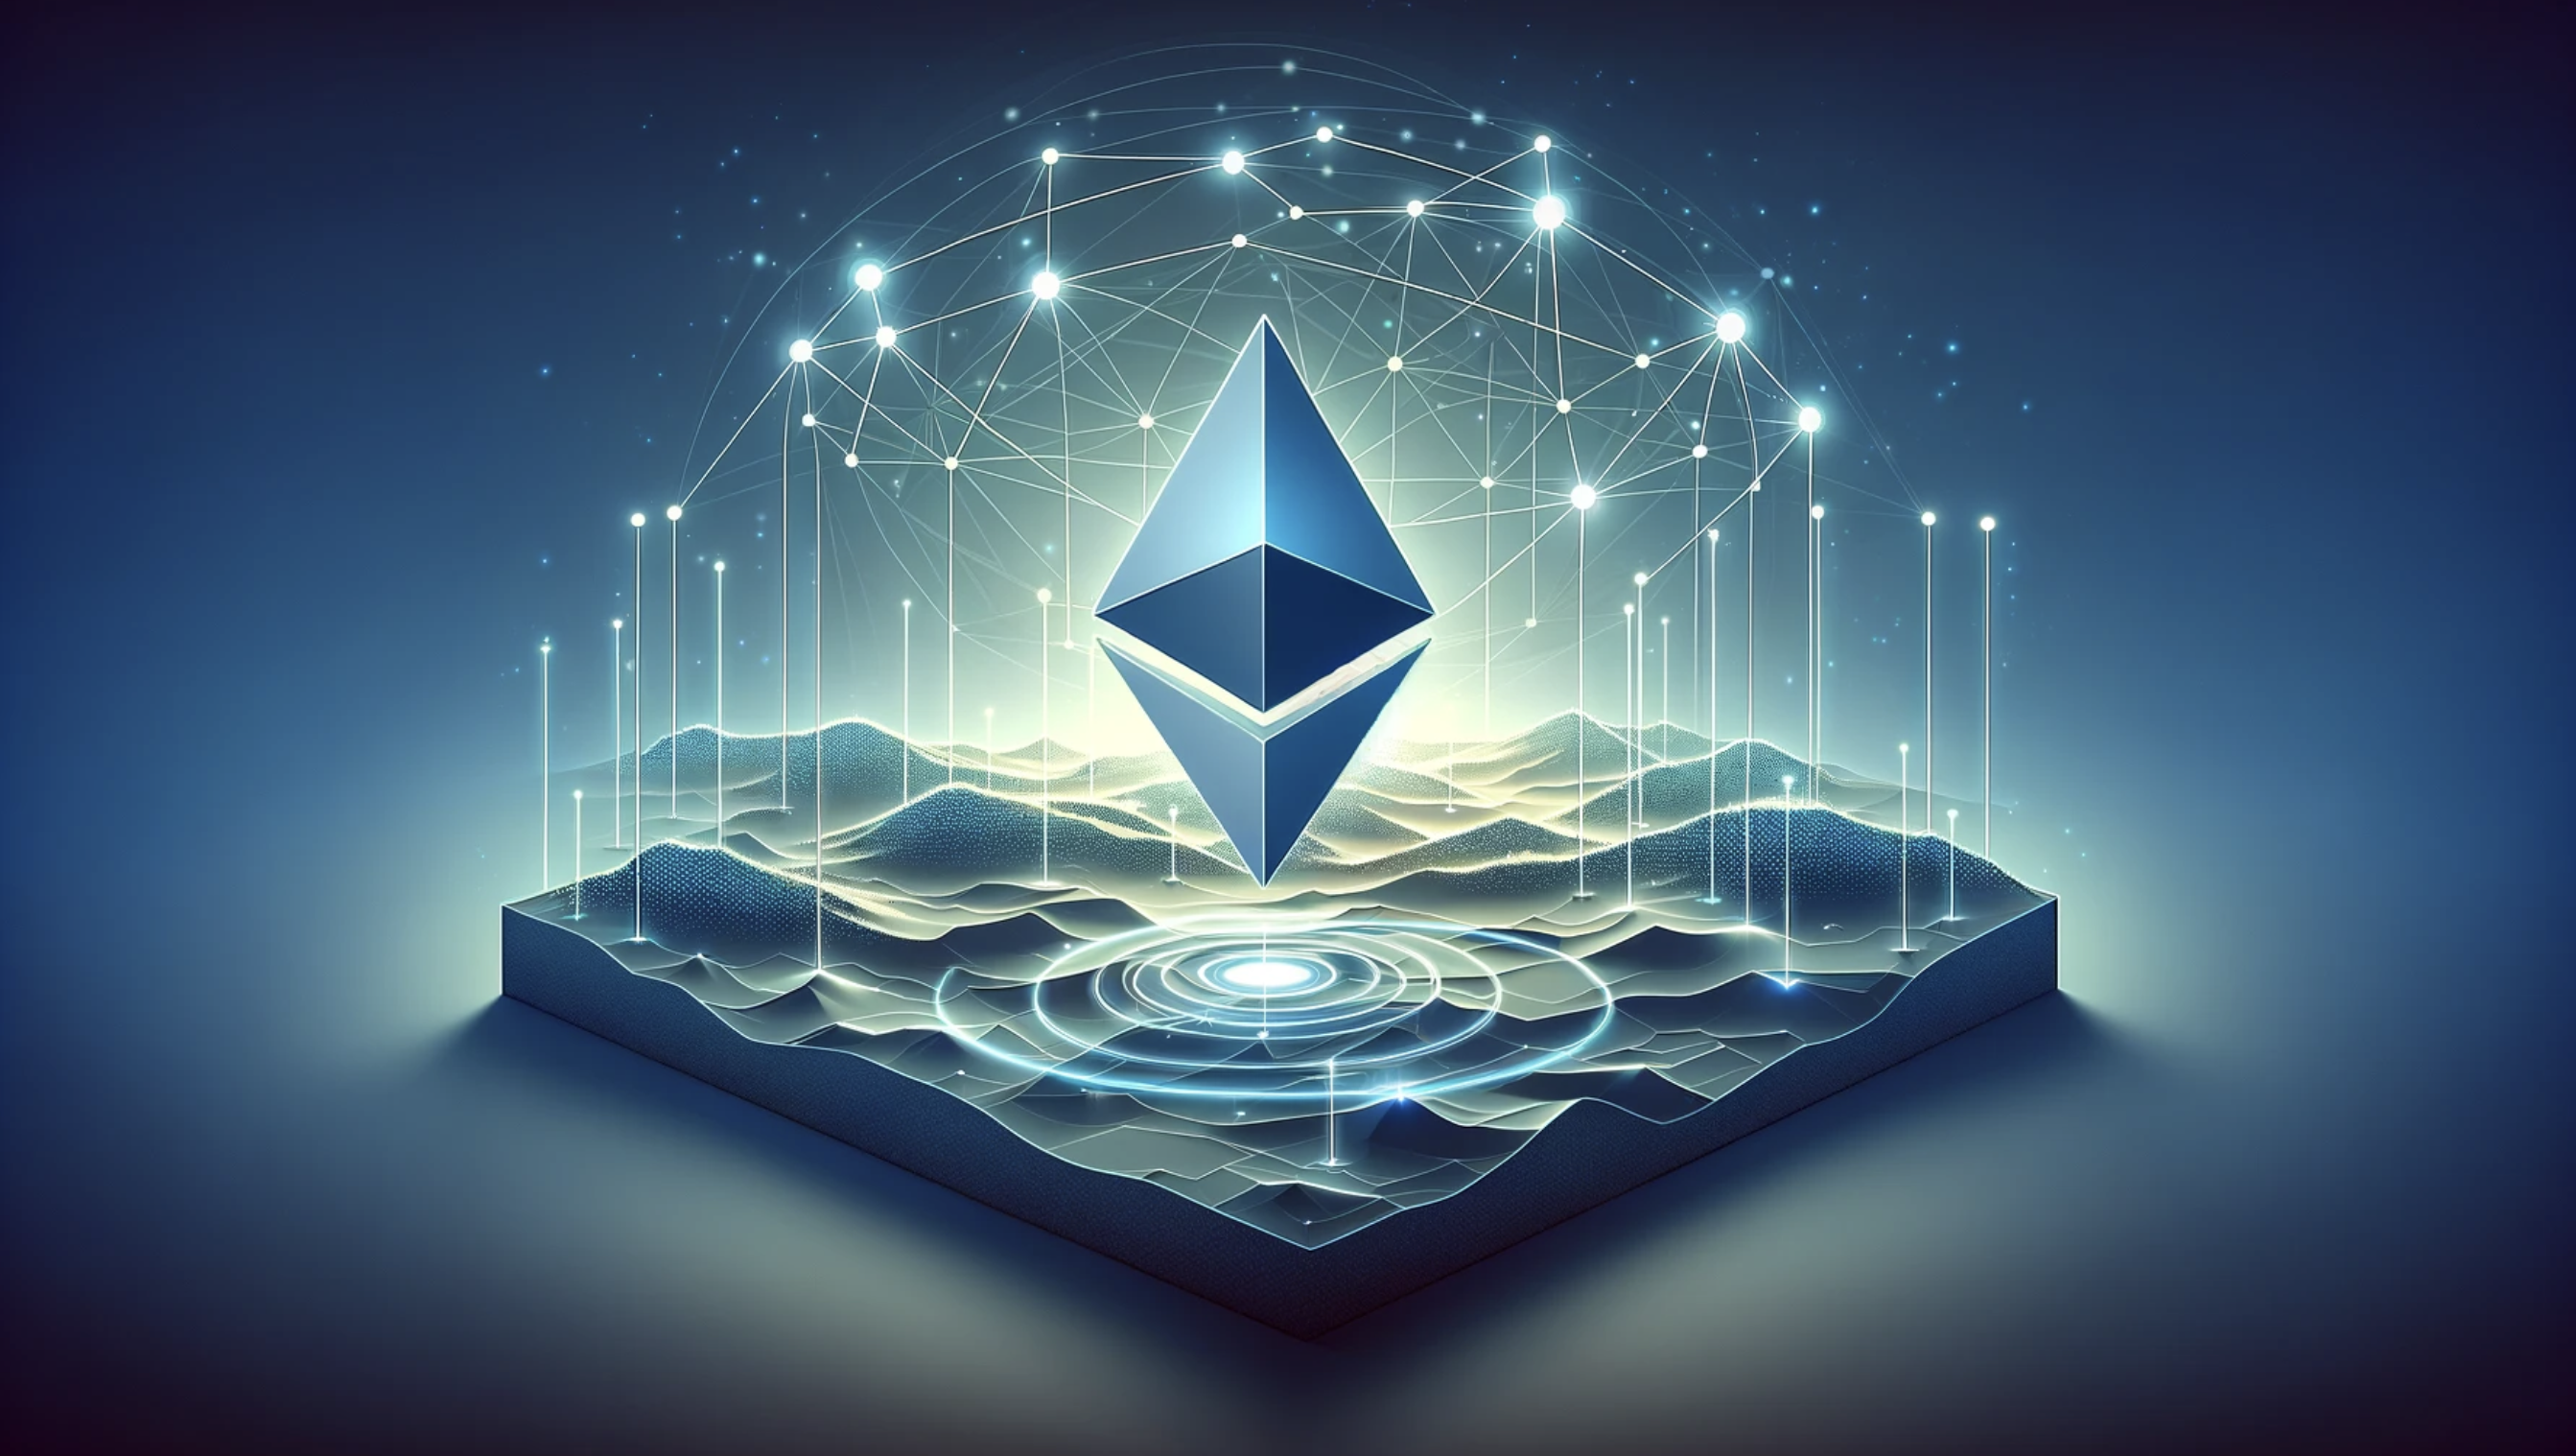 Ethereum node art illustration - showing an Ethereum logo hovering a blockchain network